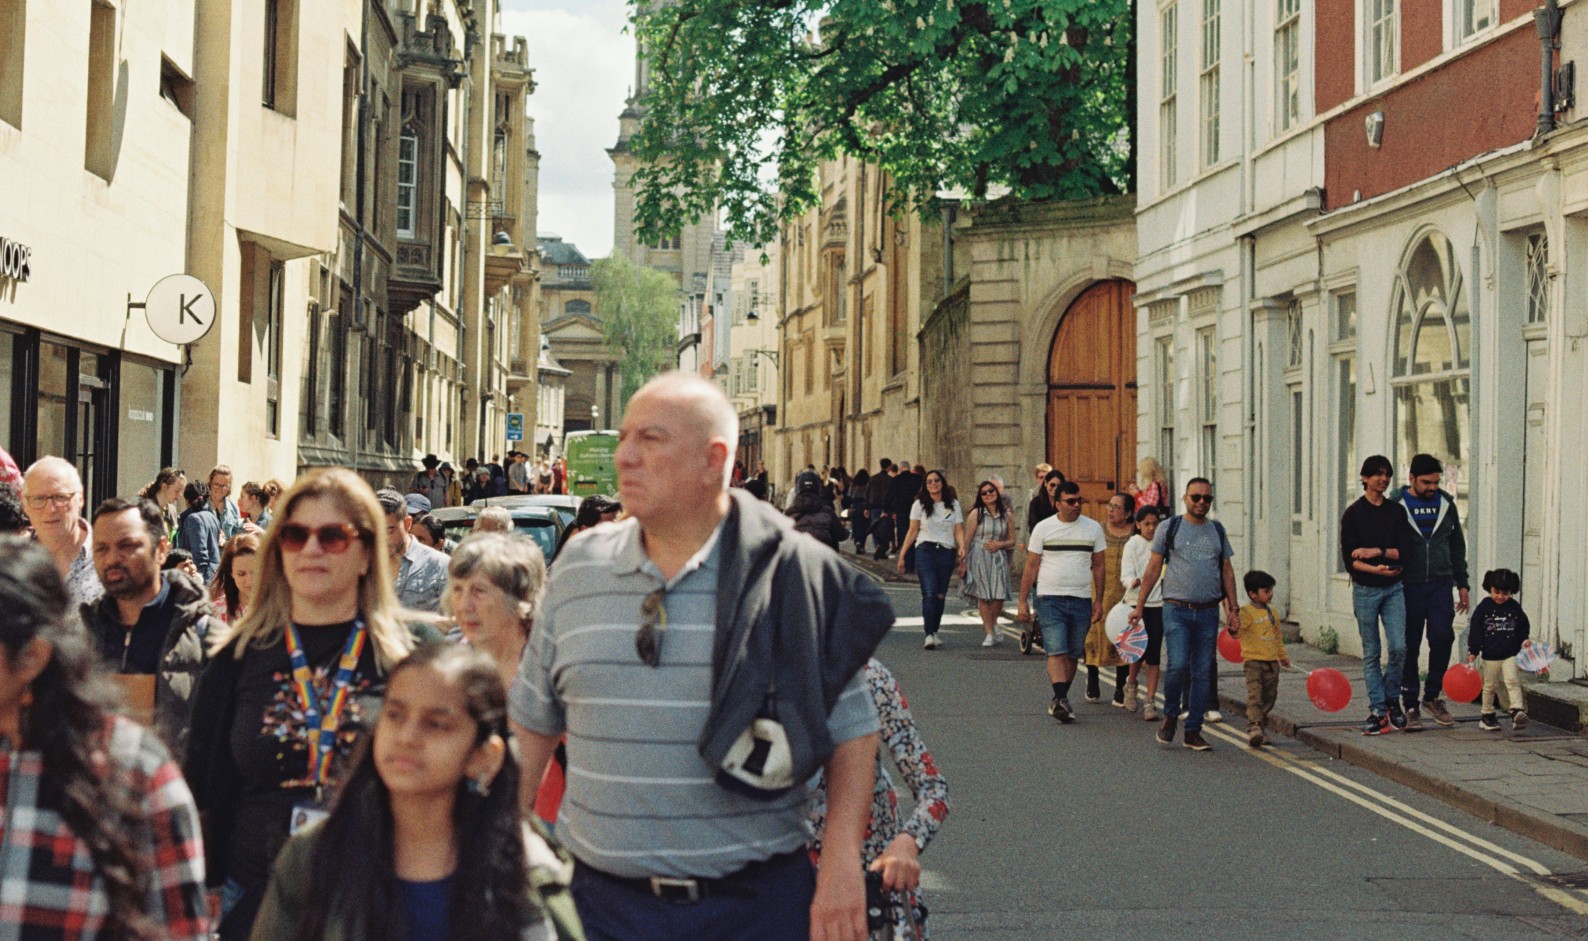 Crowd walking through Oxford city street on summer's day